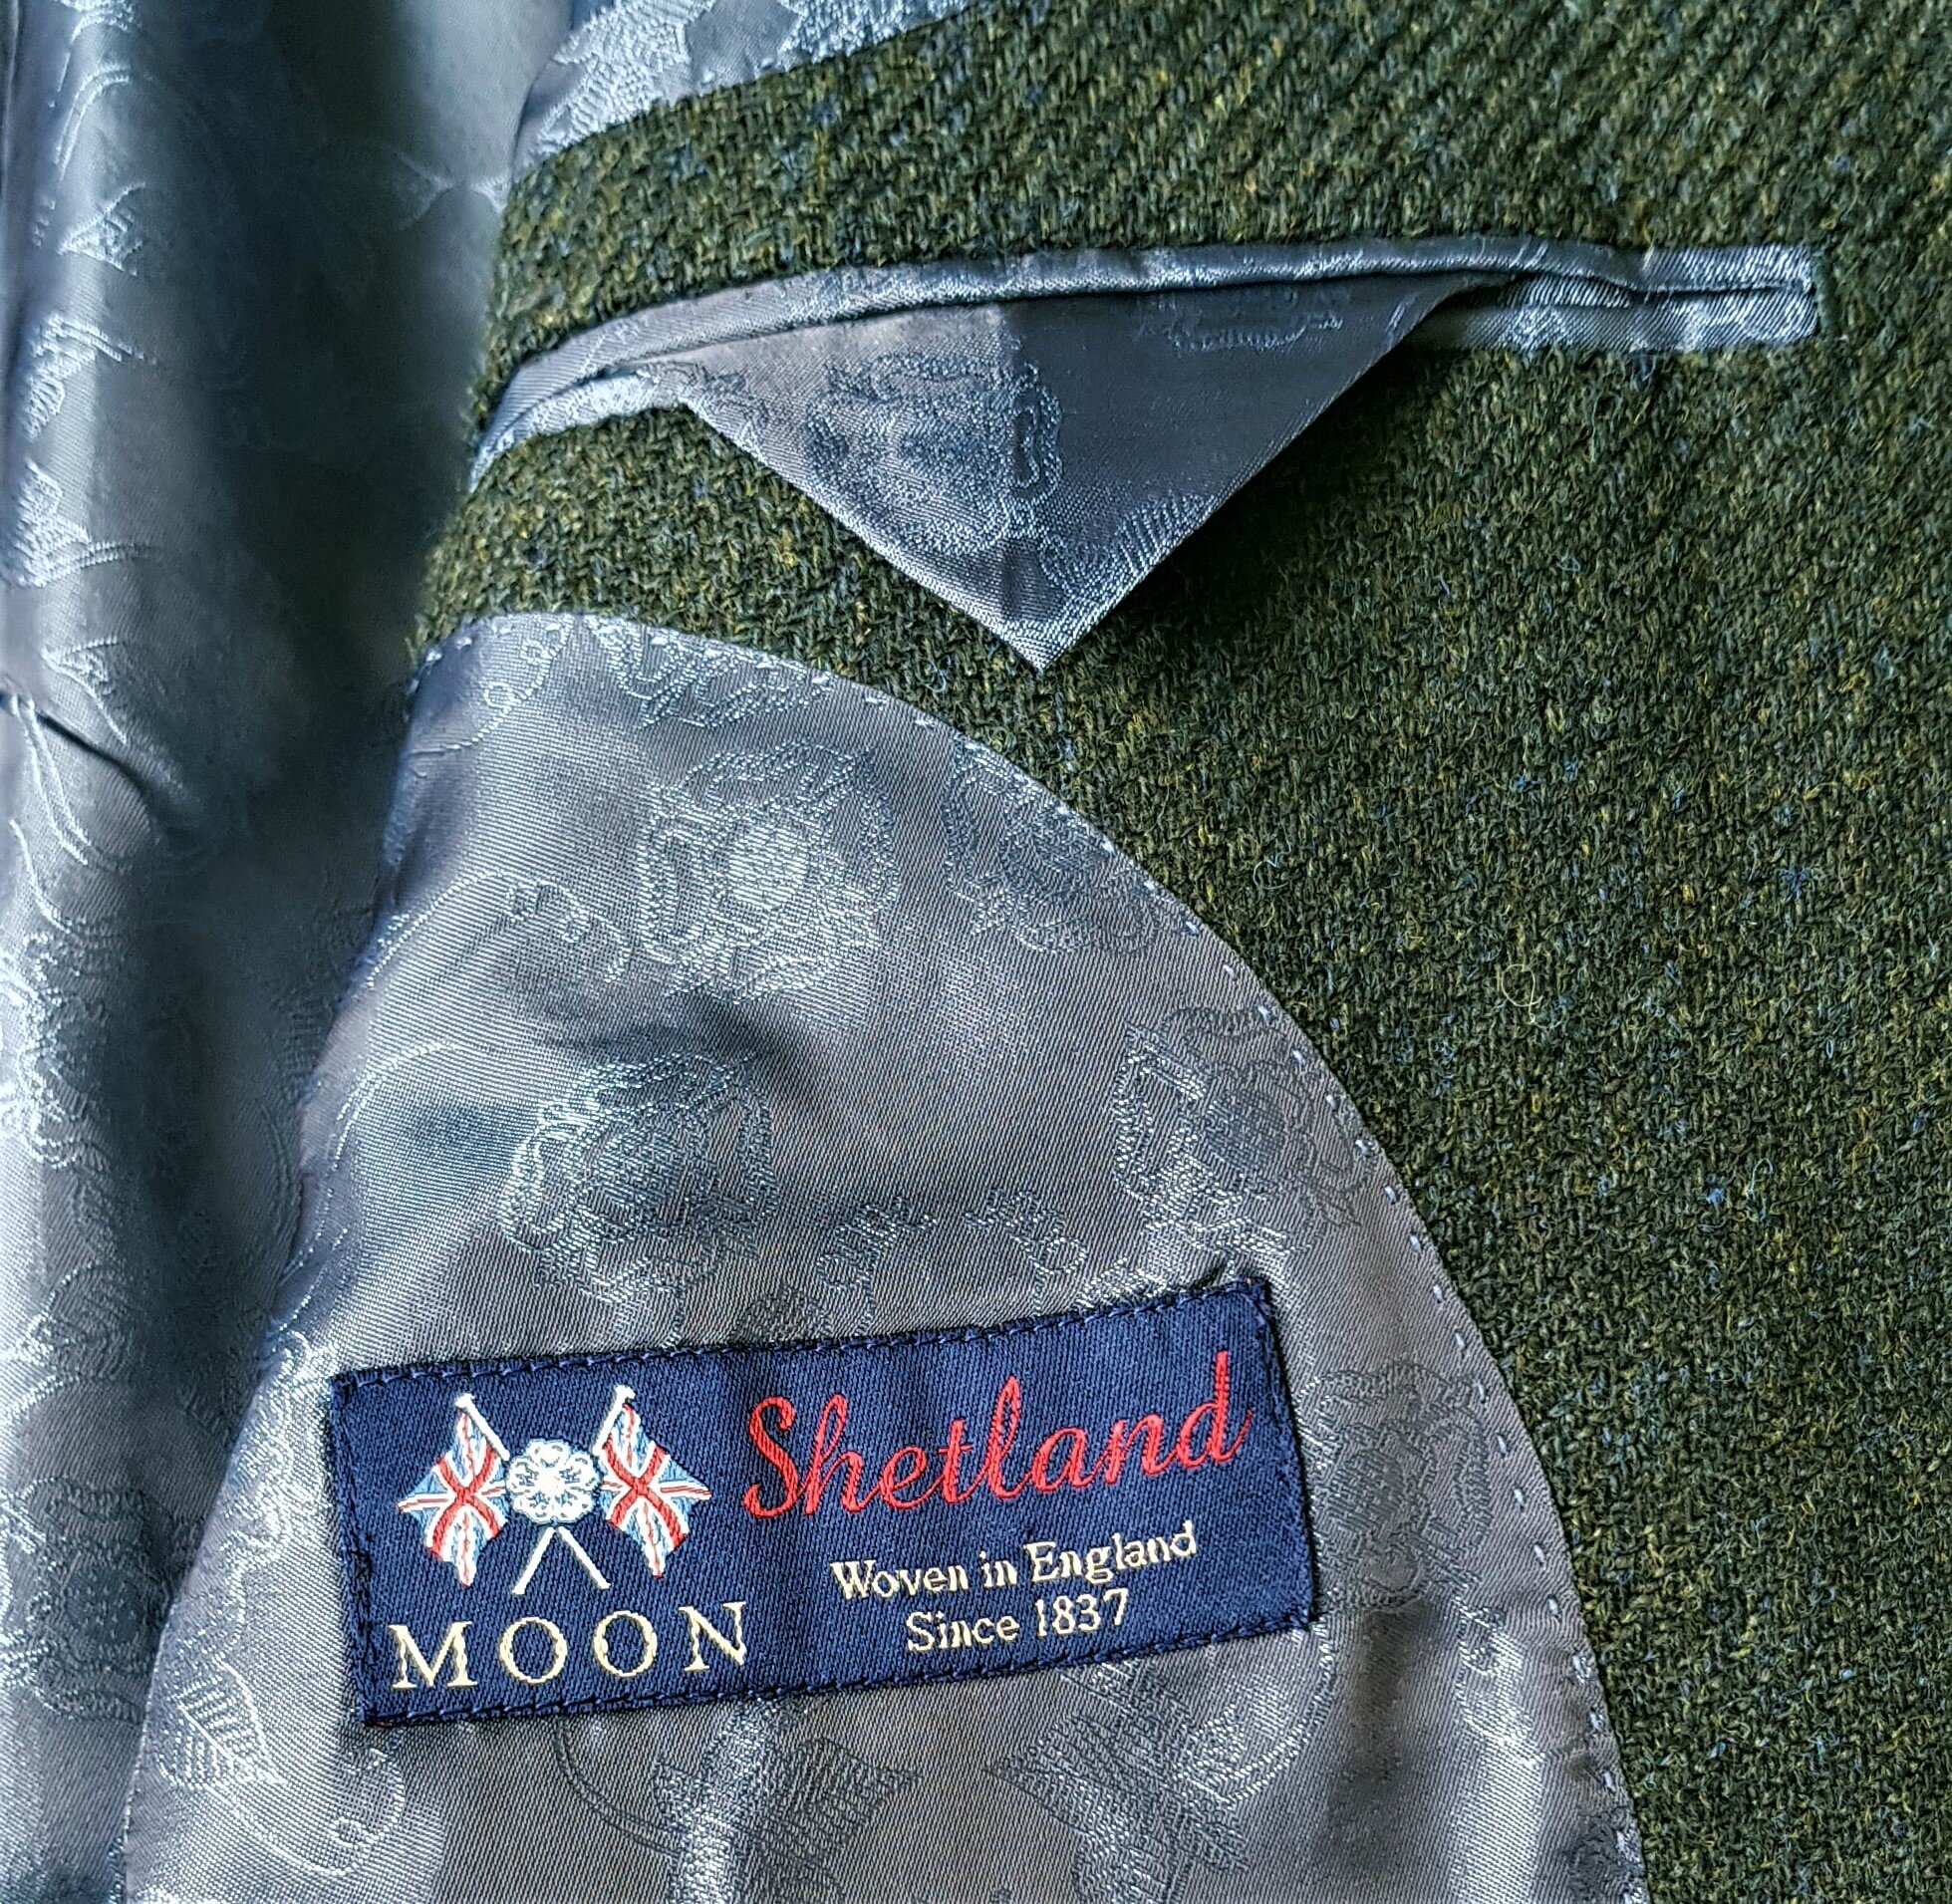 Two Piece Suit in Abraham Moon Shetland Twill (26).jpg